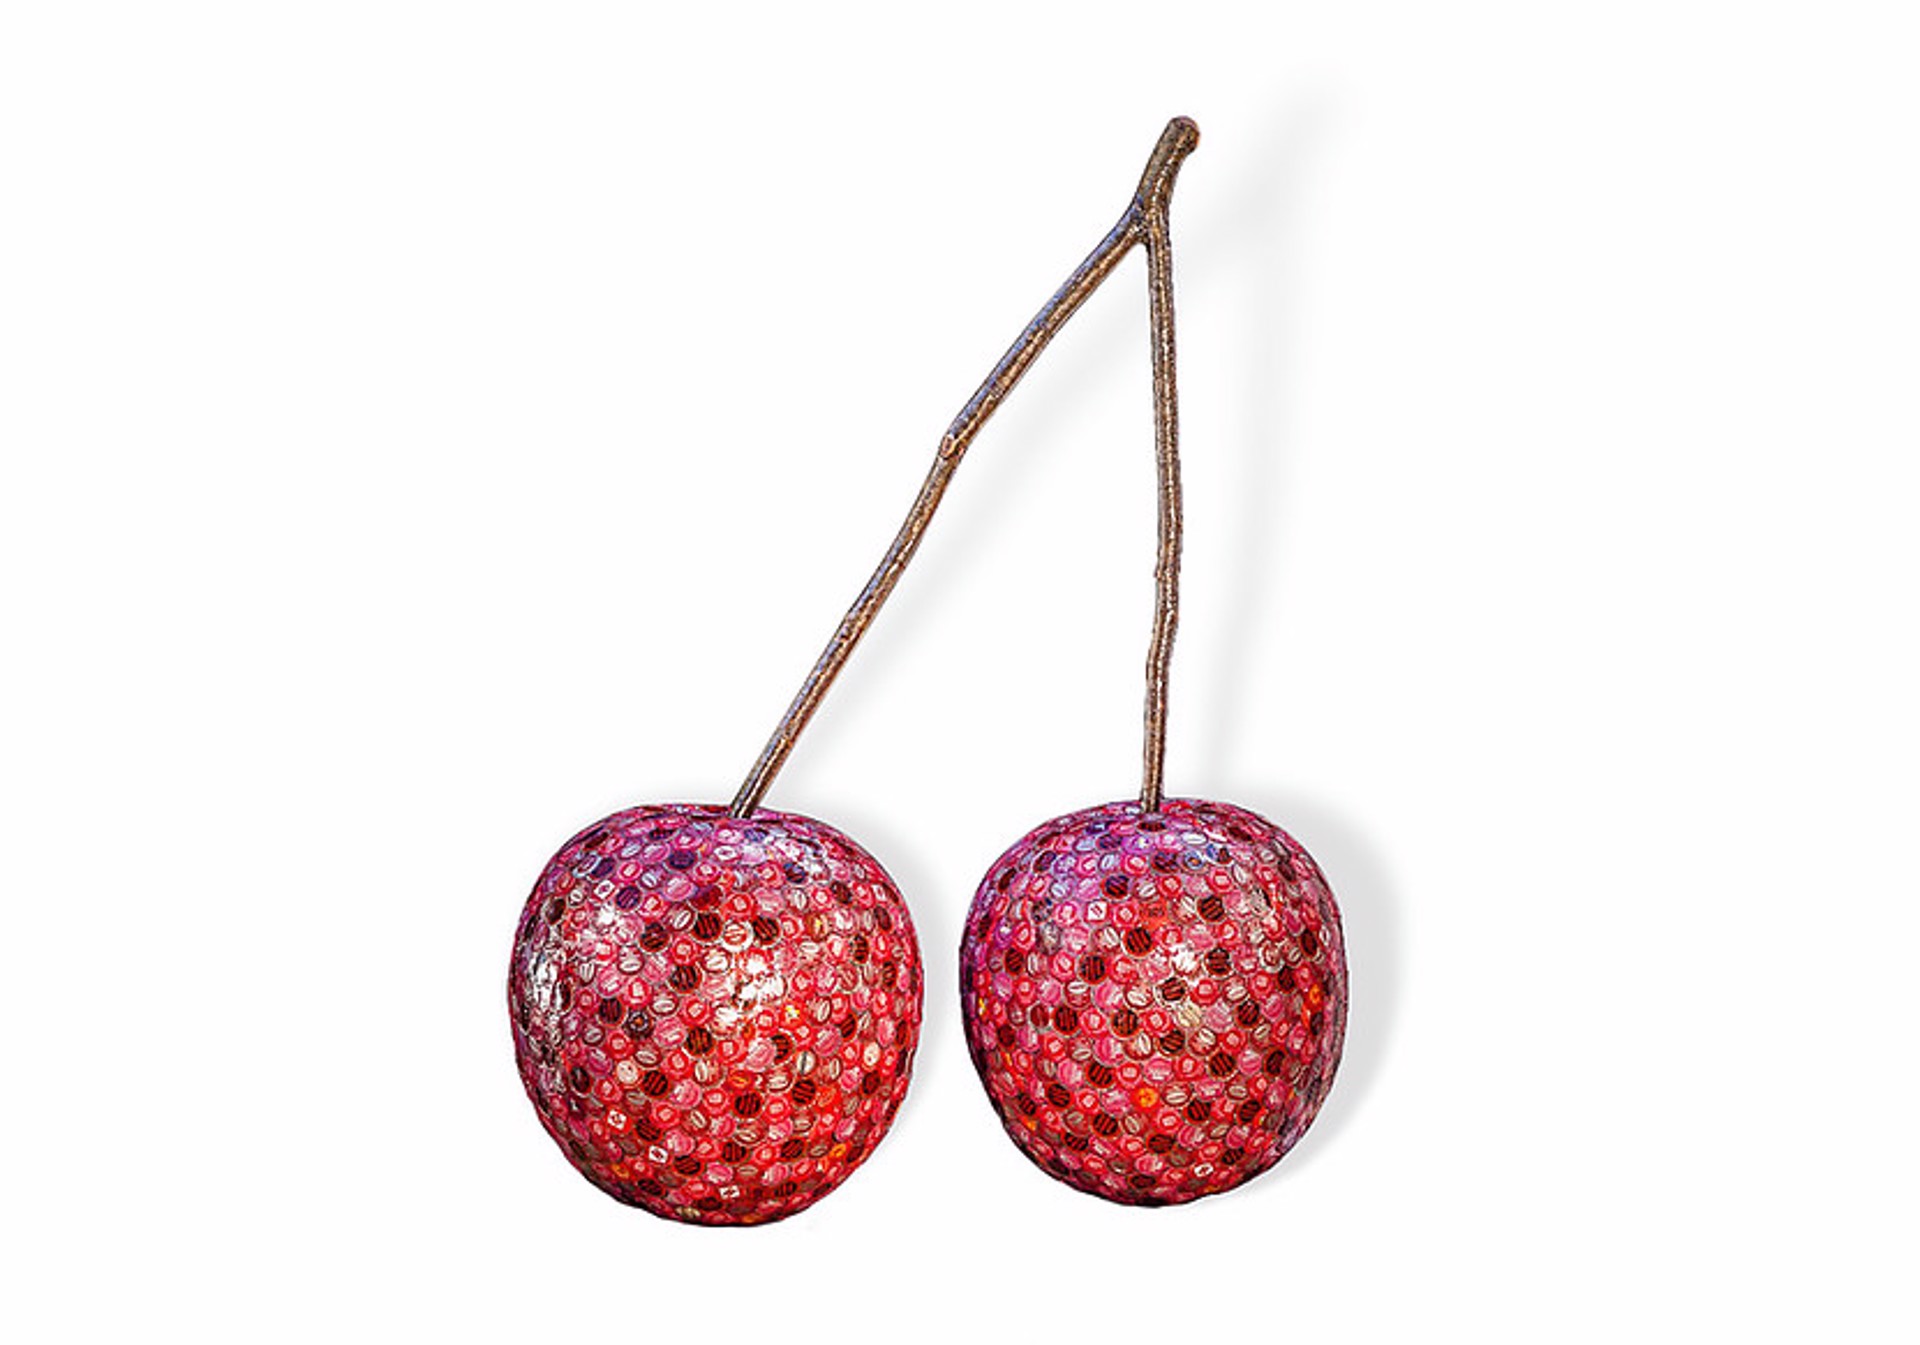 Cherries (Woodstem) by Dakota Pratt